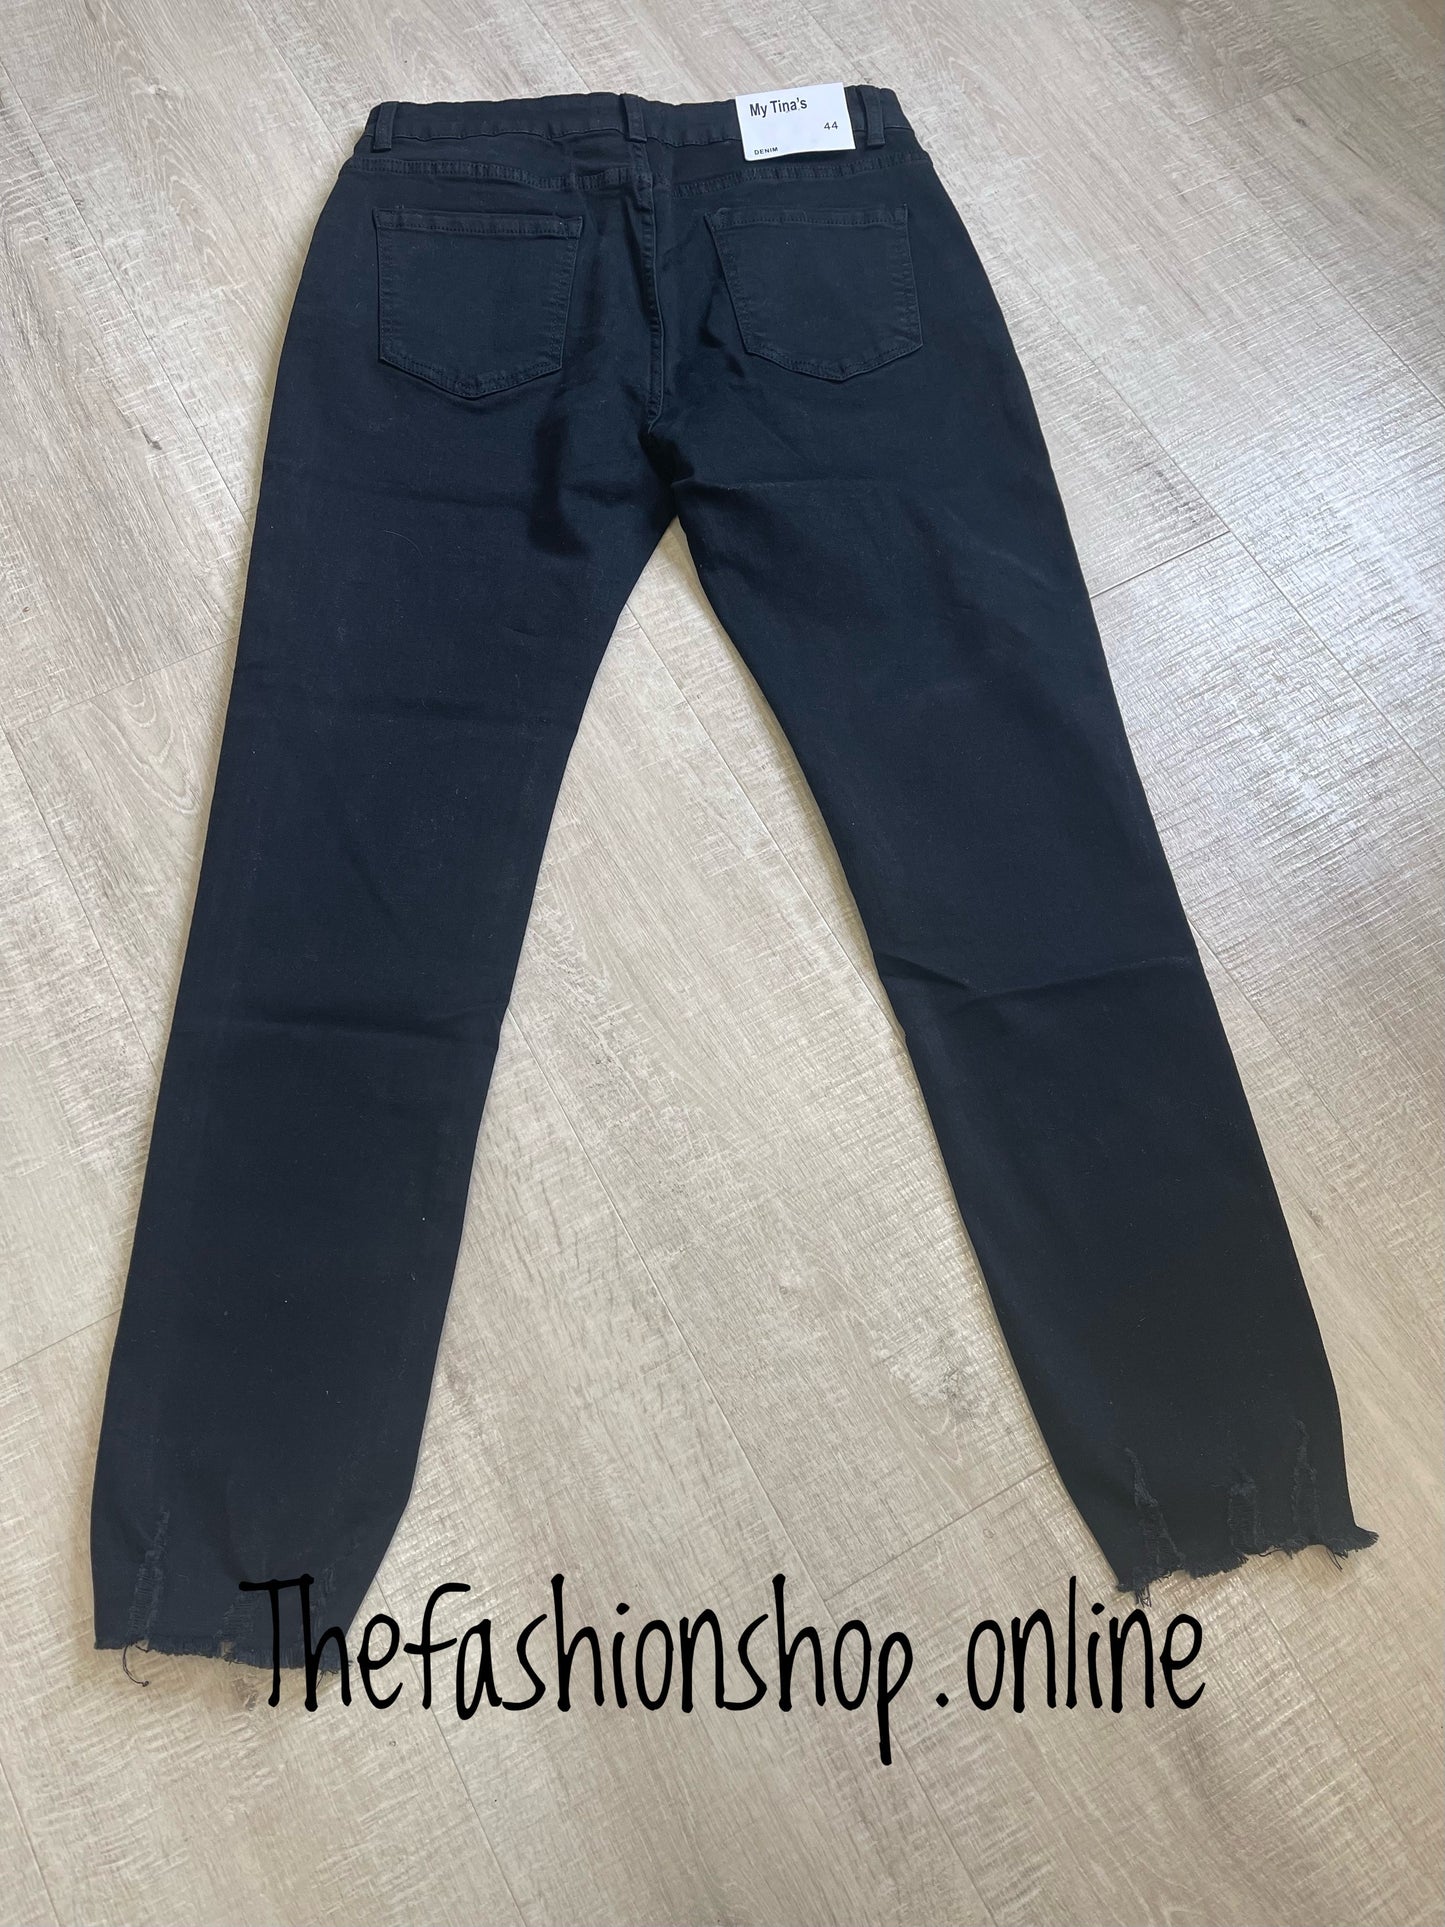 Black premium ladies fit frayed edge jeans 10-20